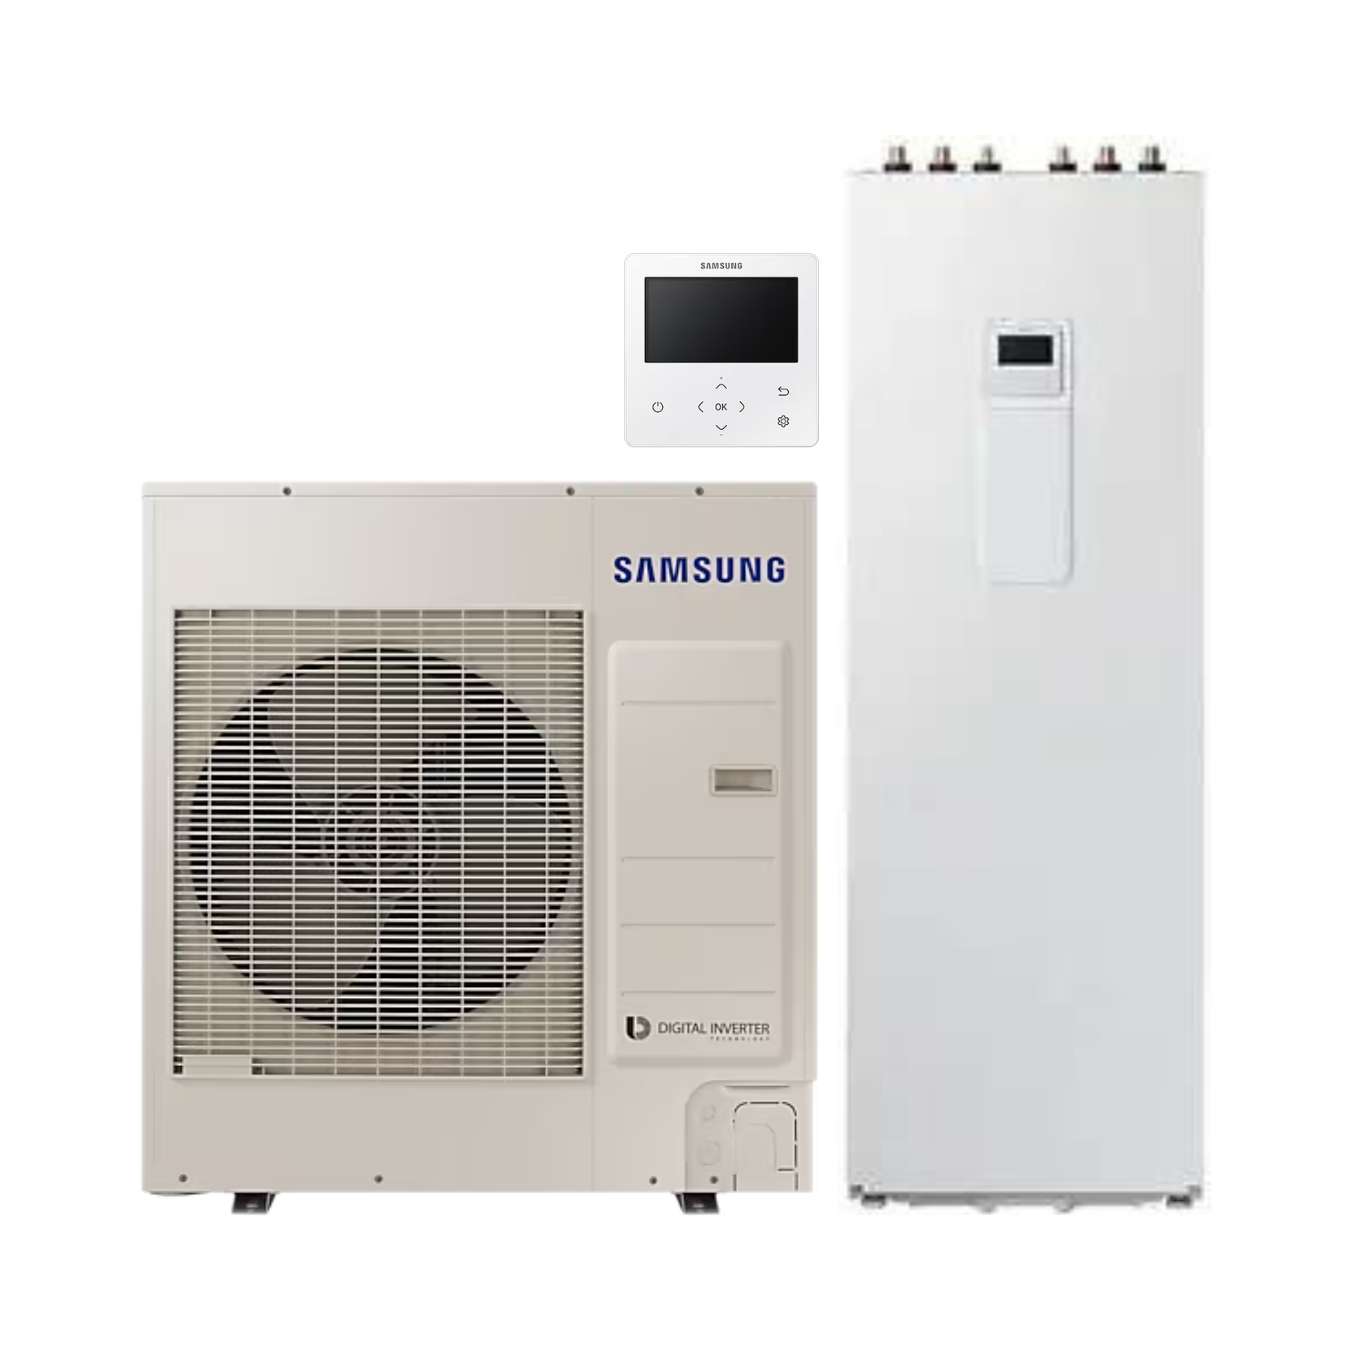 Conjunto de aerotermia monobloco Samsung EHS 8 kW + Hydro Kit de 260 litros com referência EHS260R328 à marca SAMSUNG